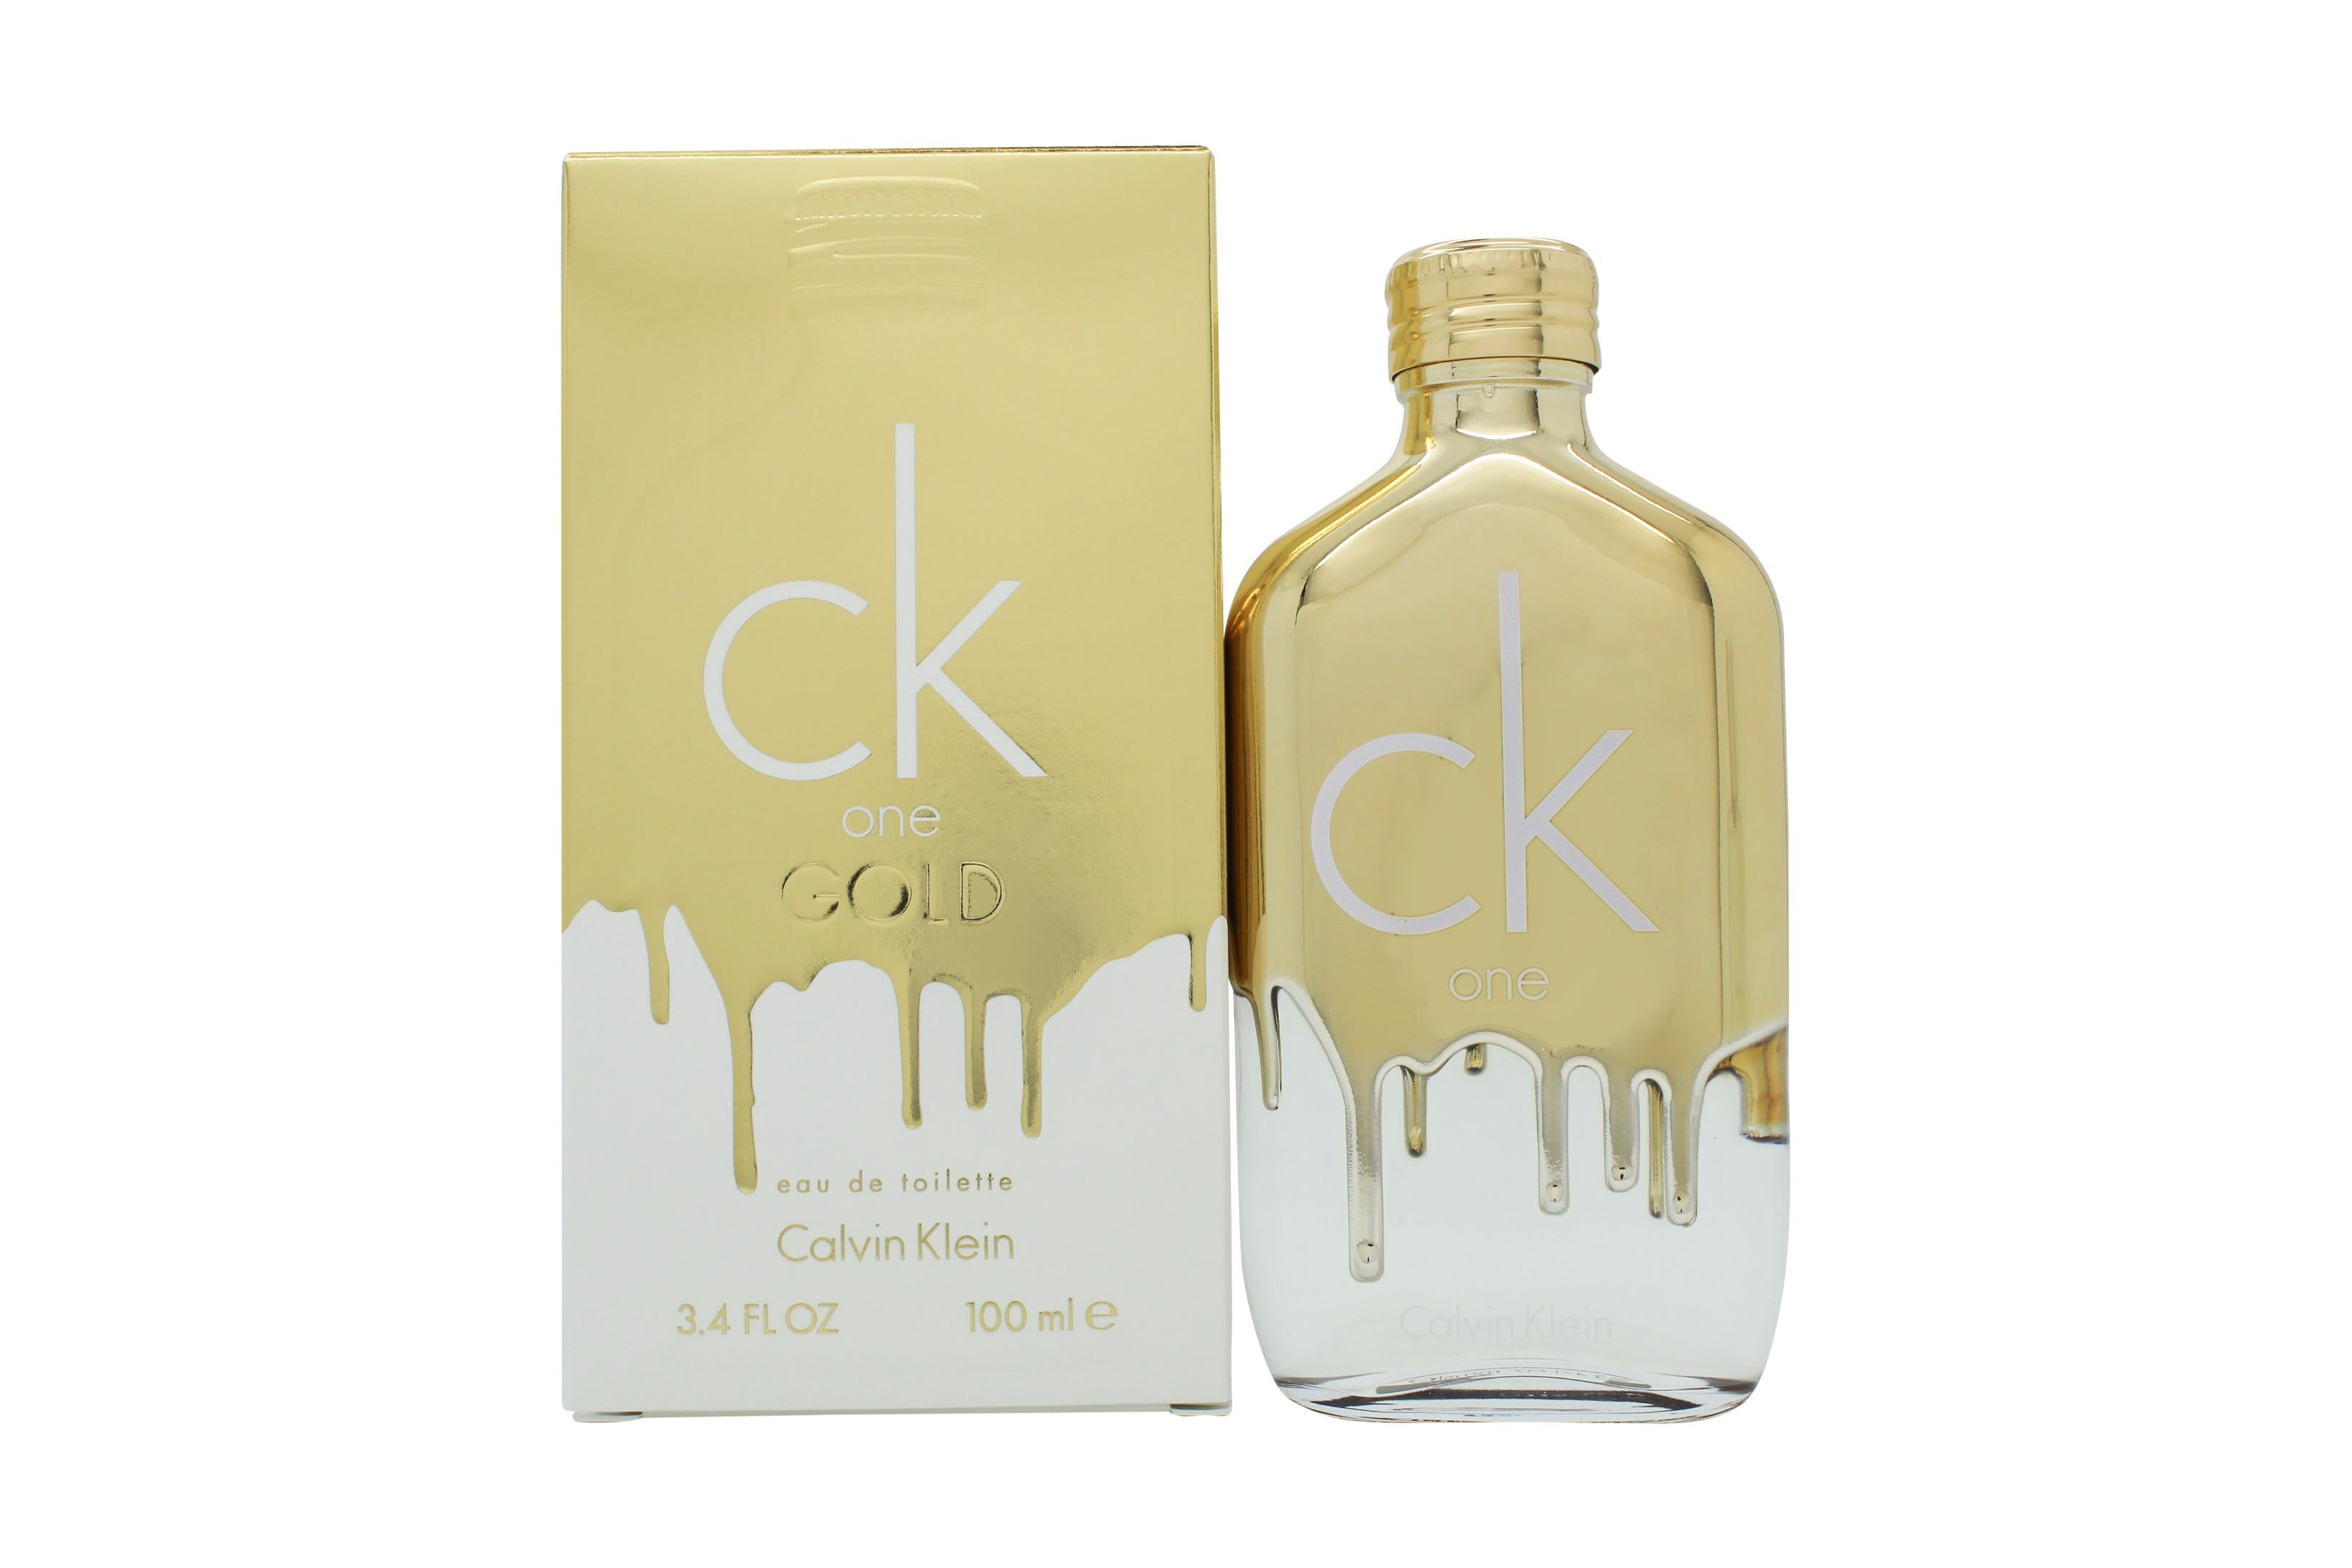 View Calvin Klein CK One Gold Eau de Toilette 100ml Spray information